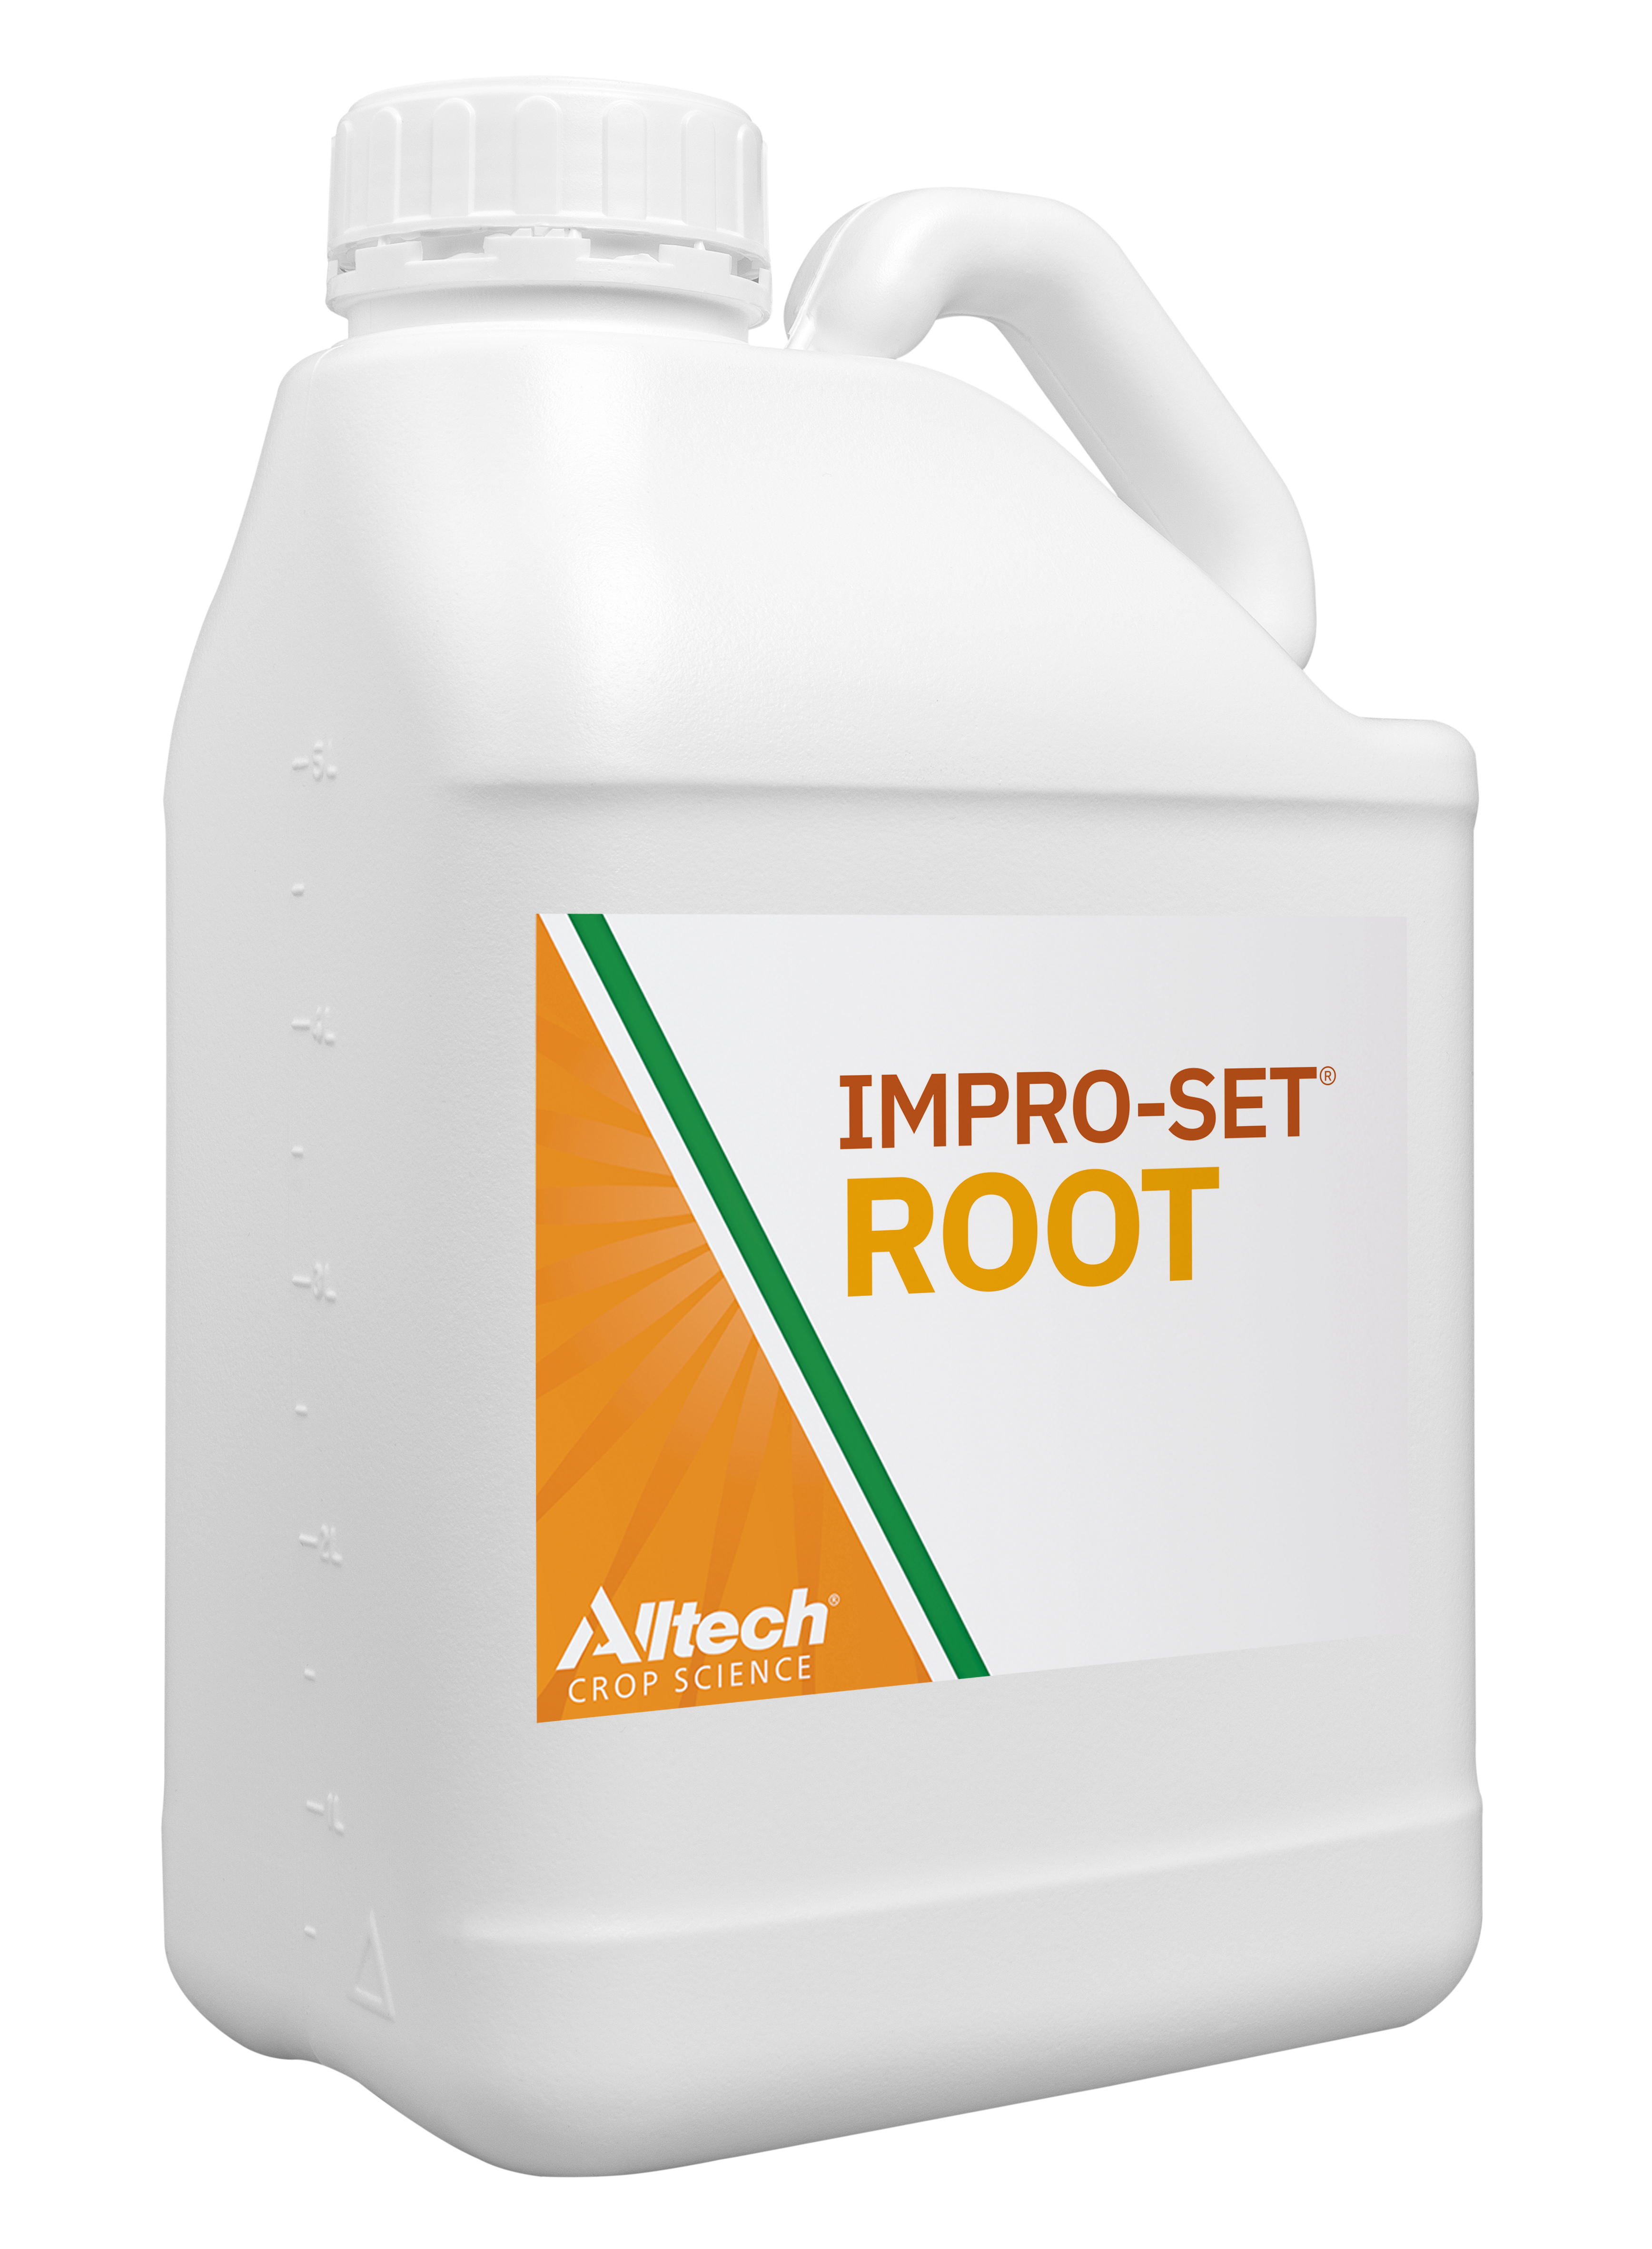 Impro-set root